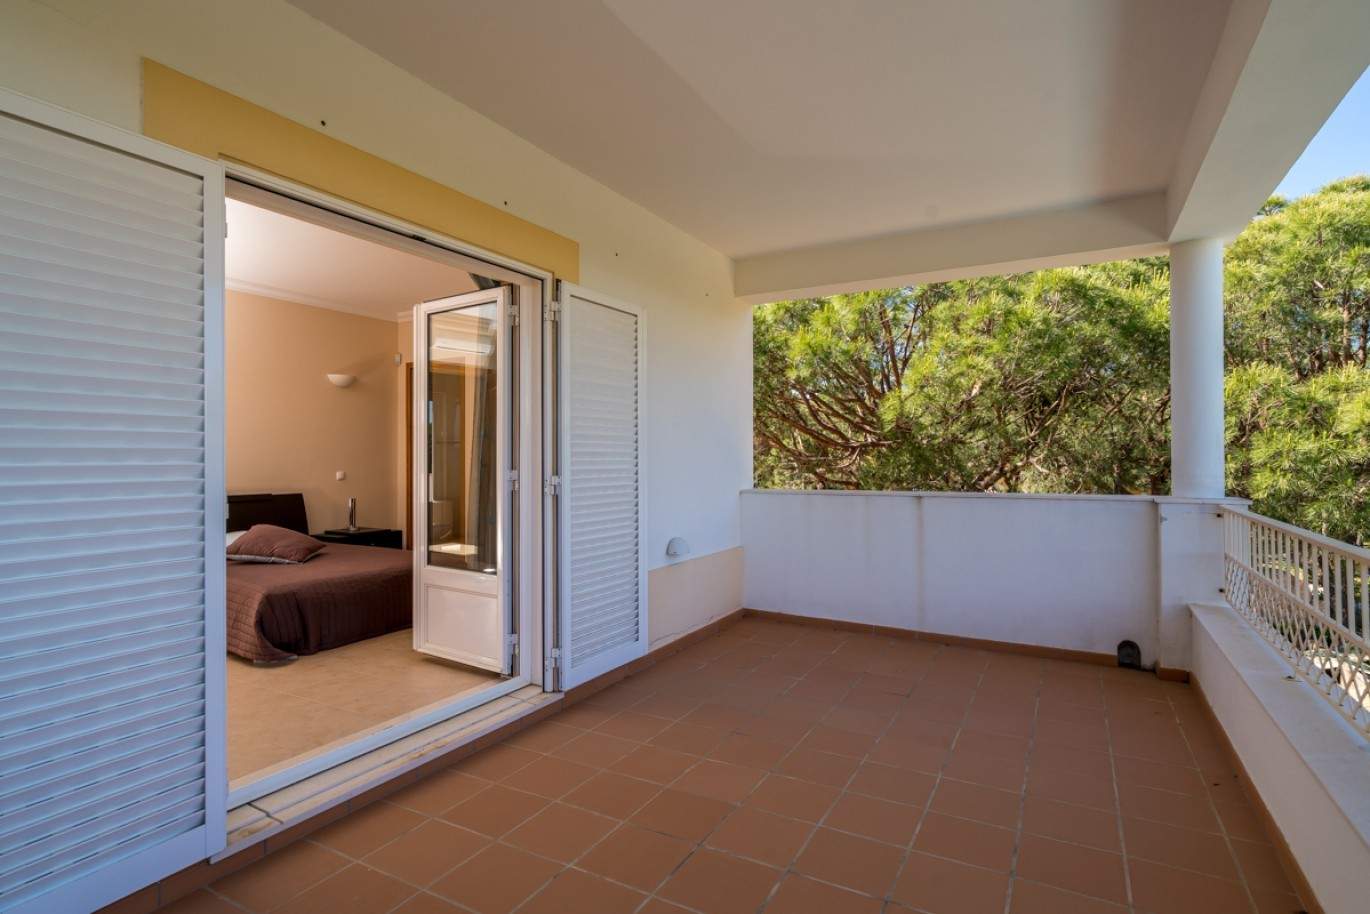 Venda de vivienda en Praia Verde, Castro Marim, Algarve, Portugal_80394